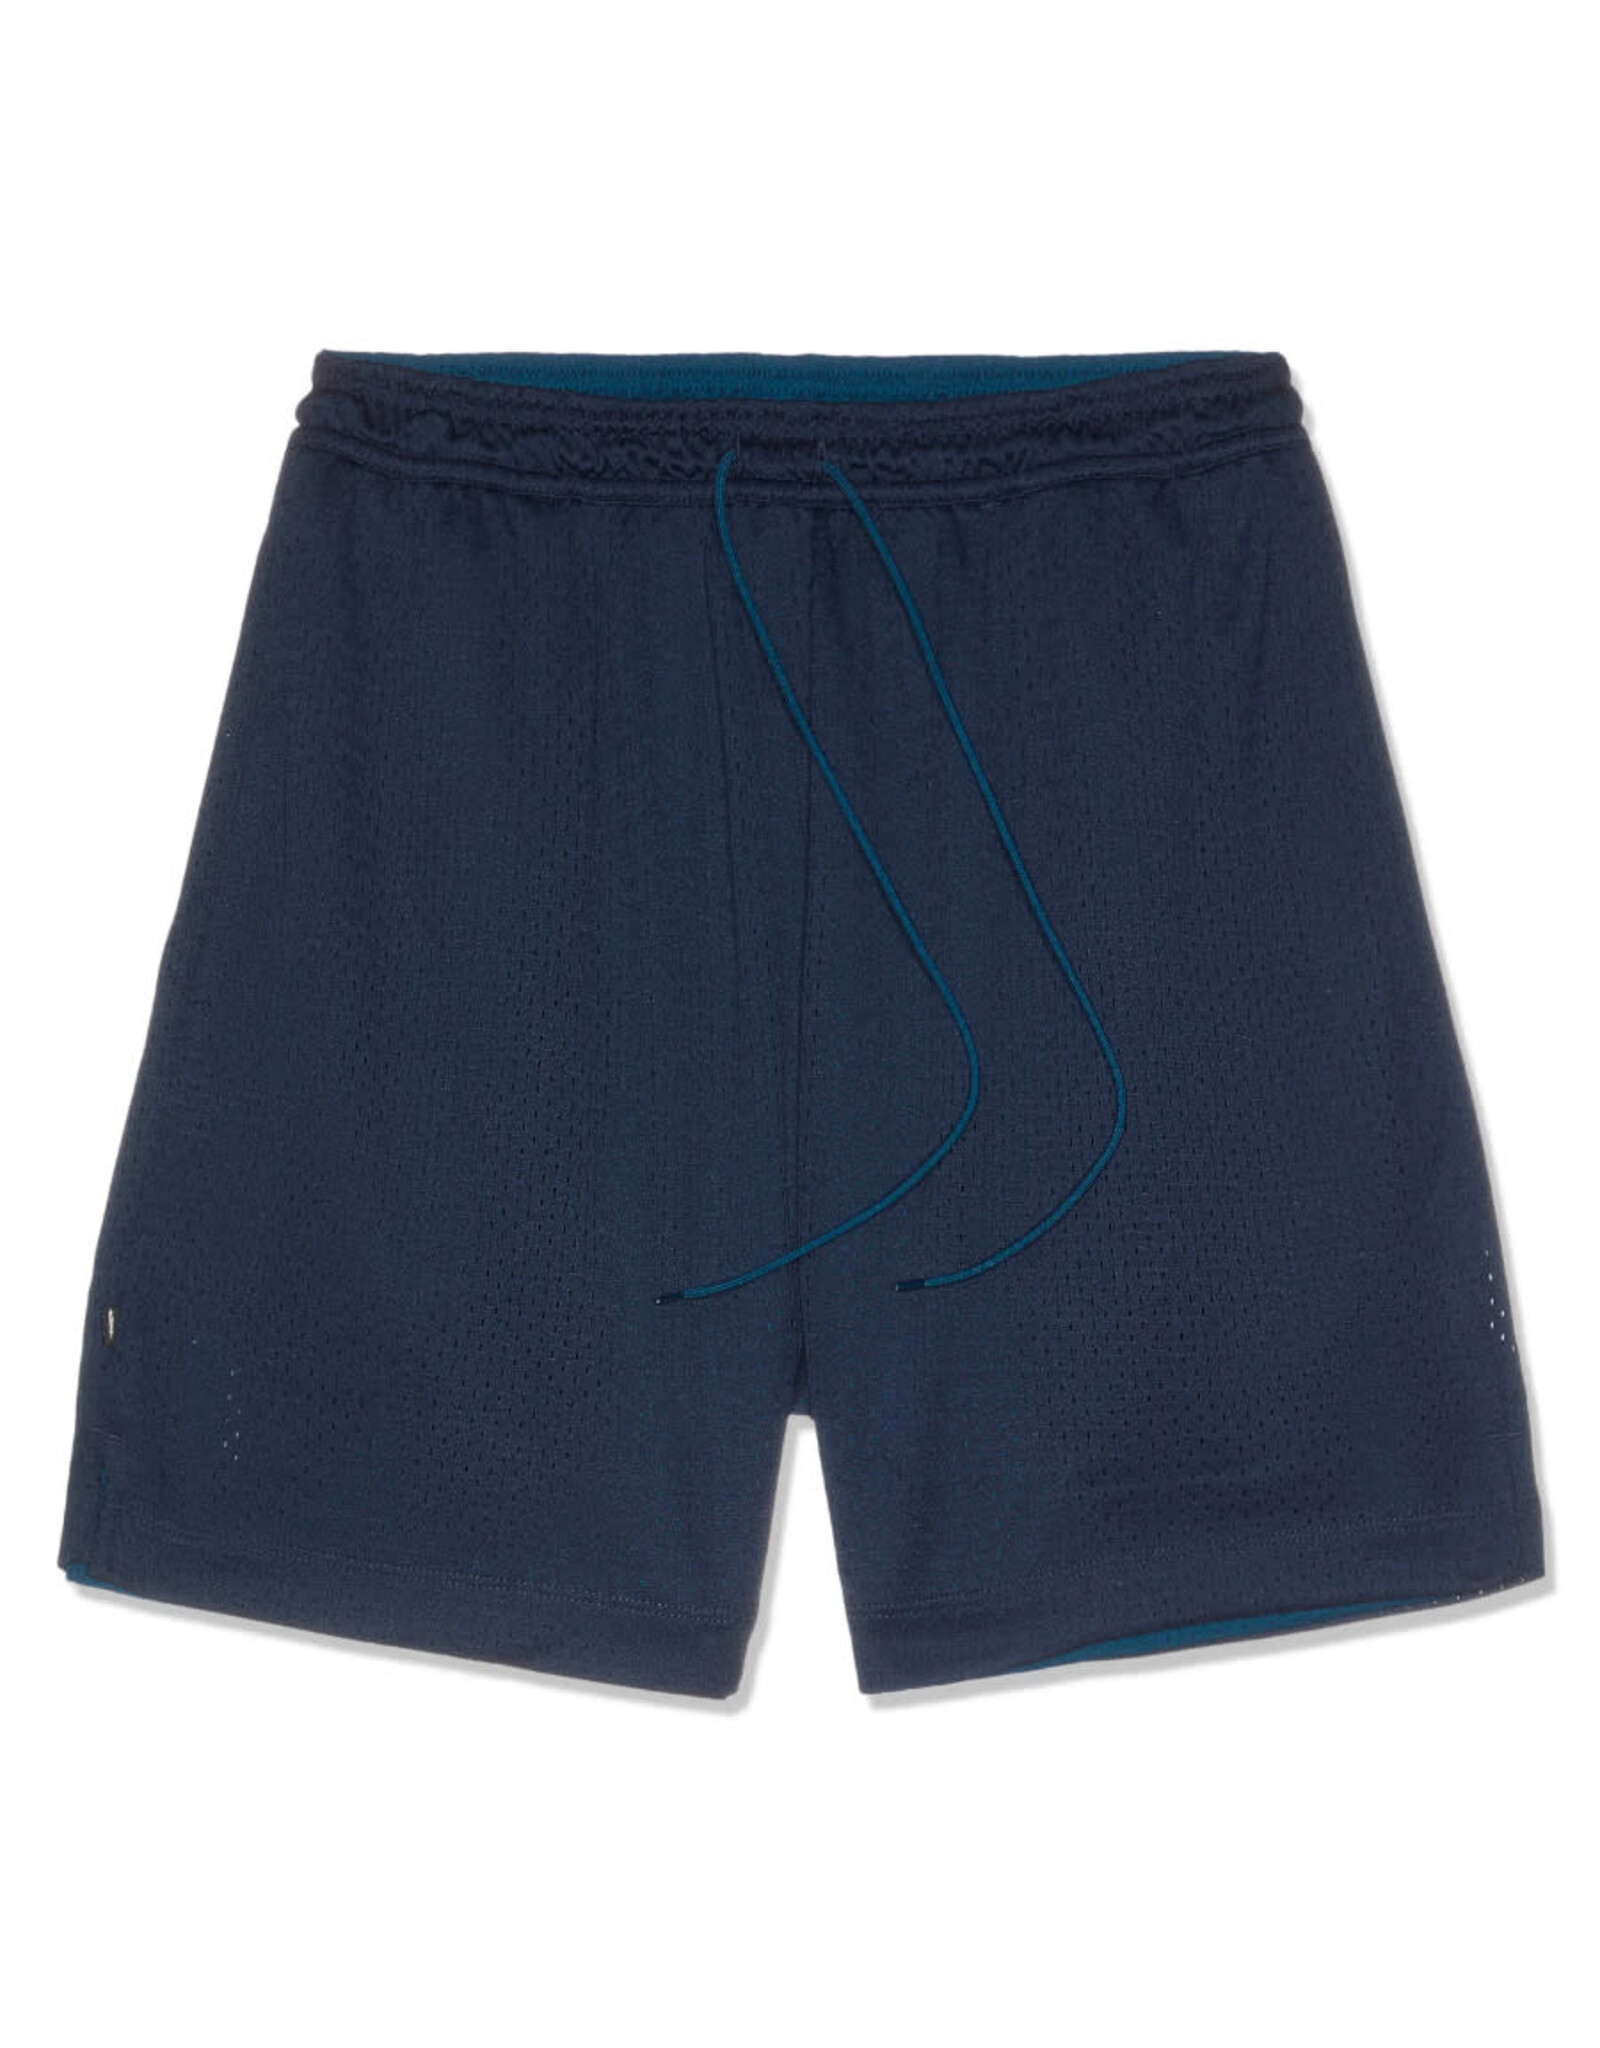 Nike SB Nike SB Shorts Reversible Skate Basketball (Midnight Navy/Court Blue)